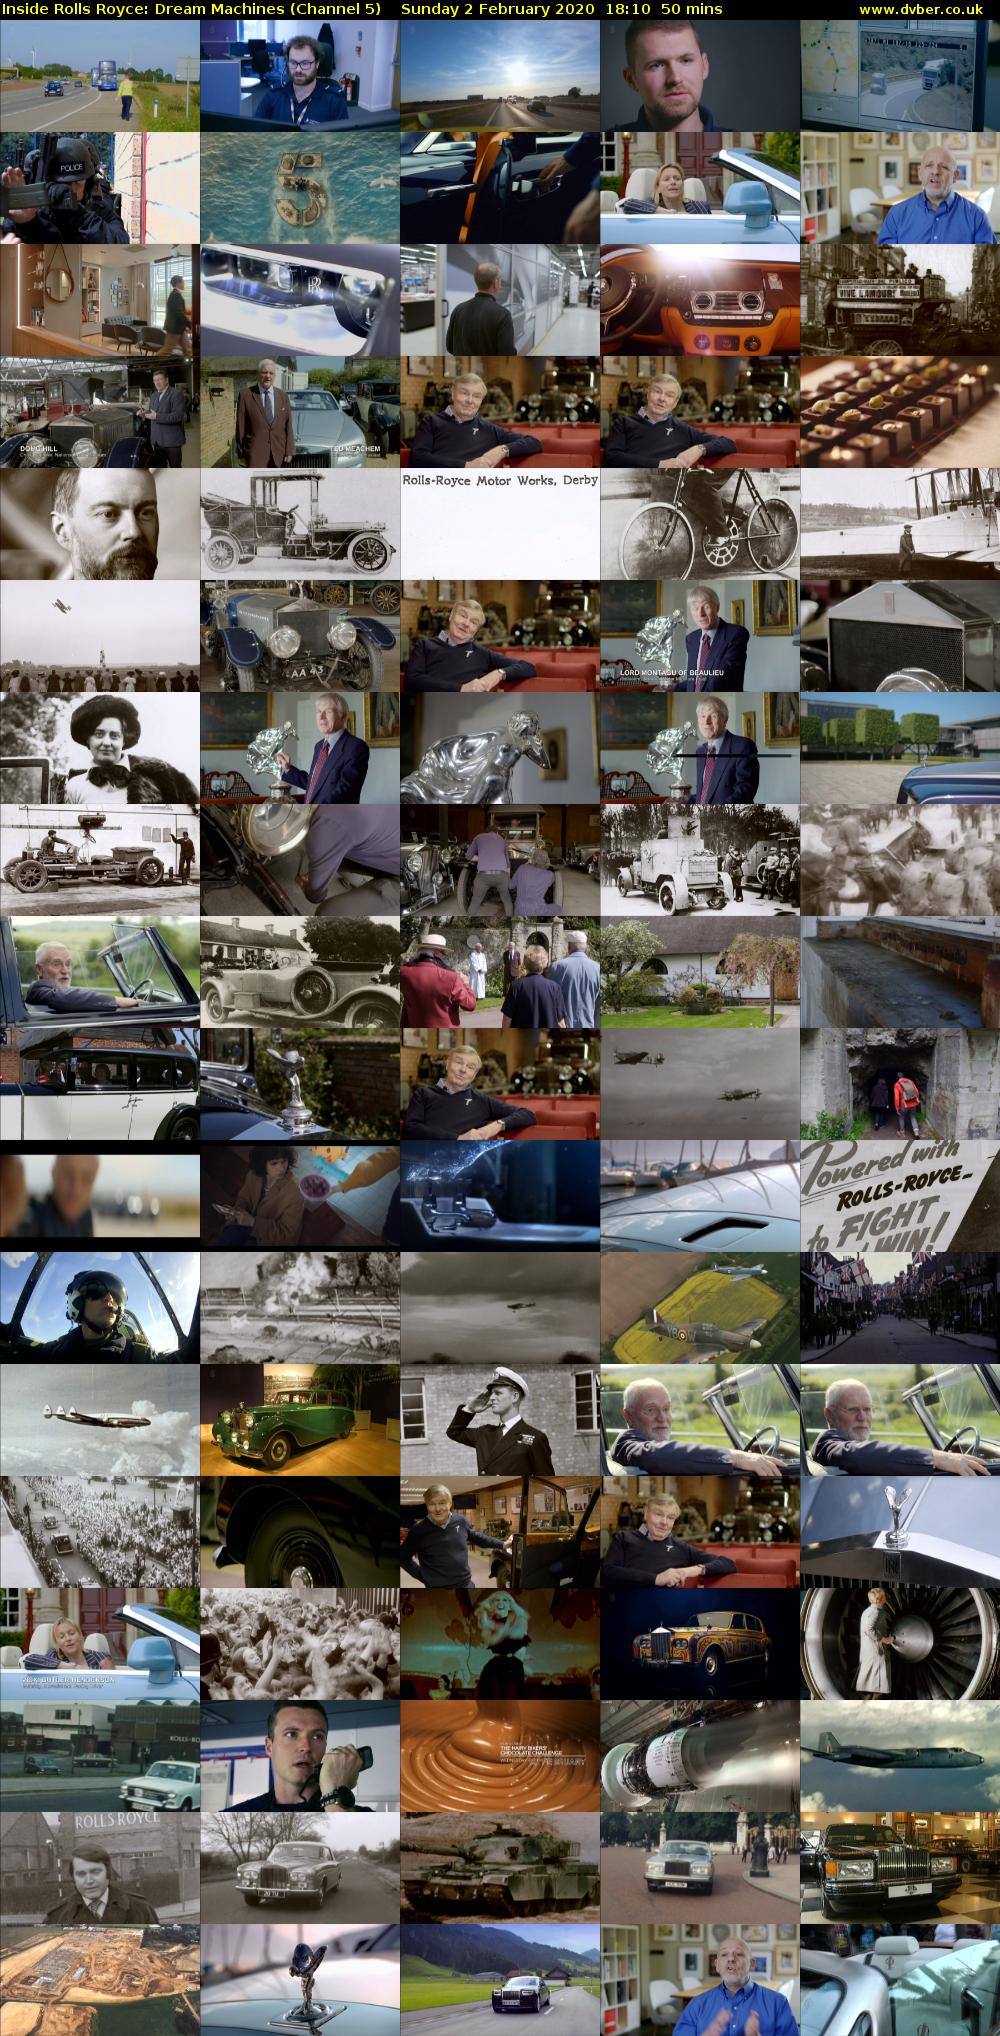 Inside Rolls Royce: Dream Machines (Channel 5) Sunday 2 February 2020 18:10 - 19:00